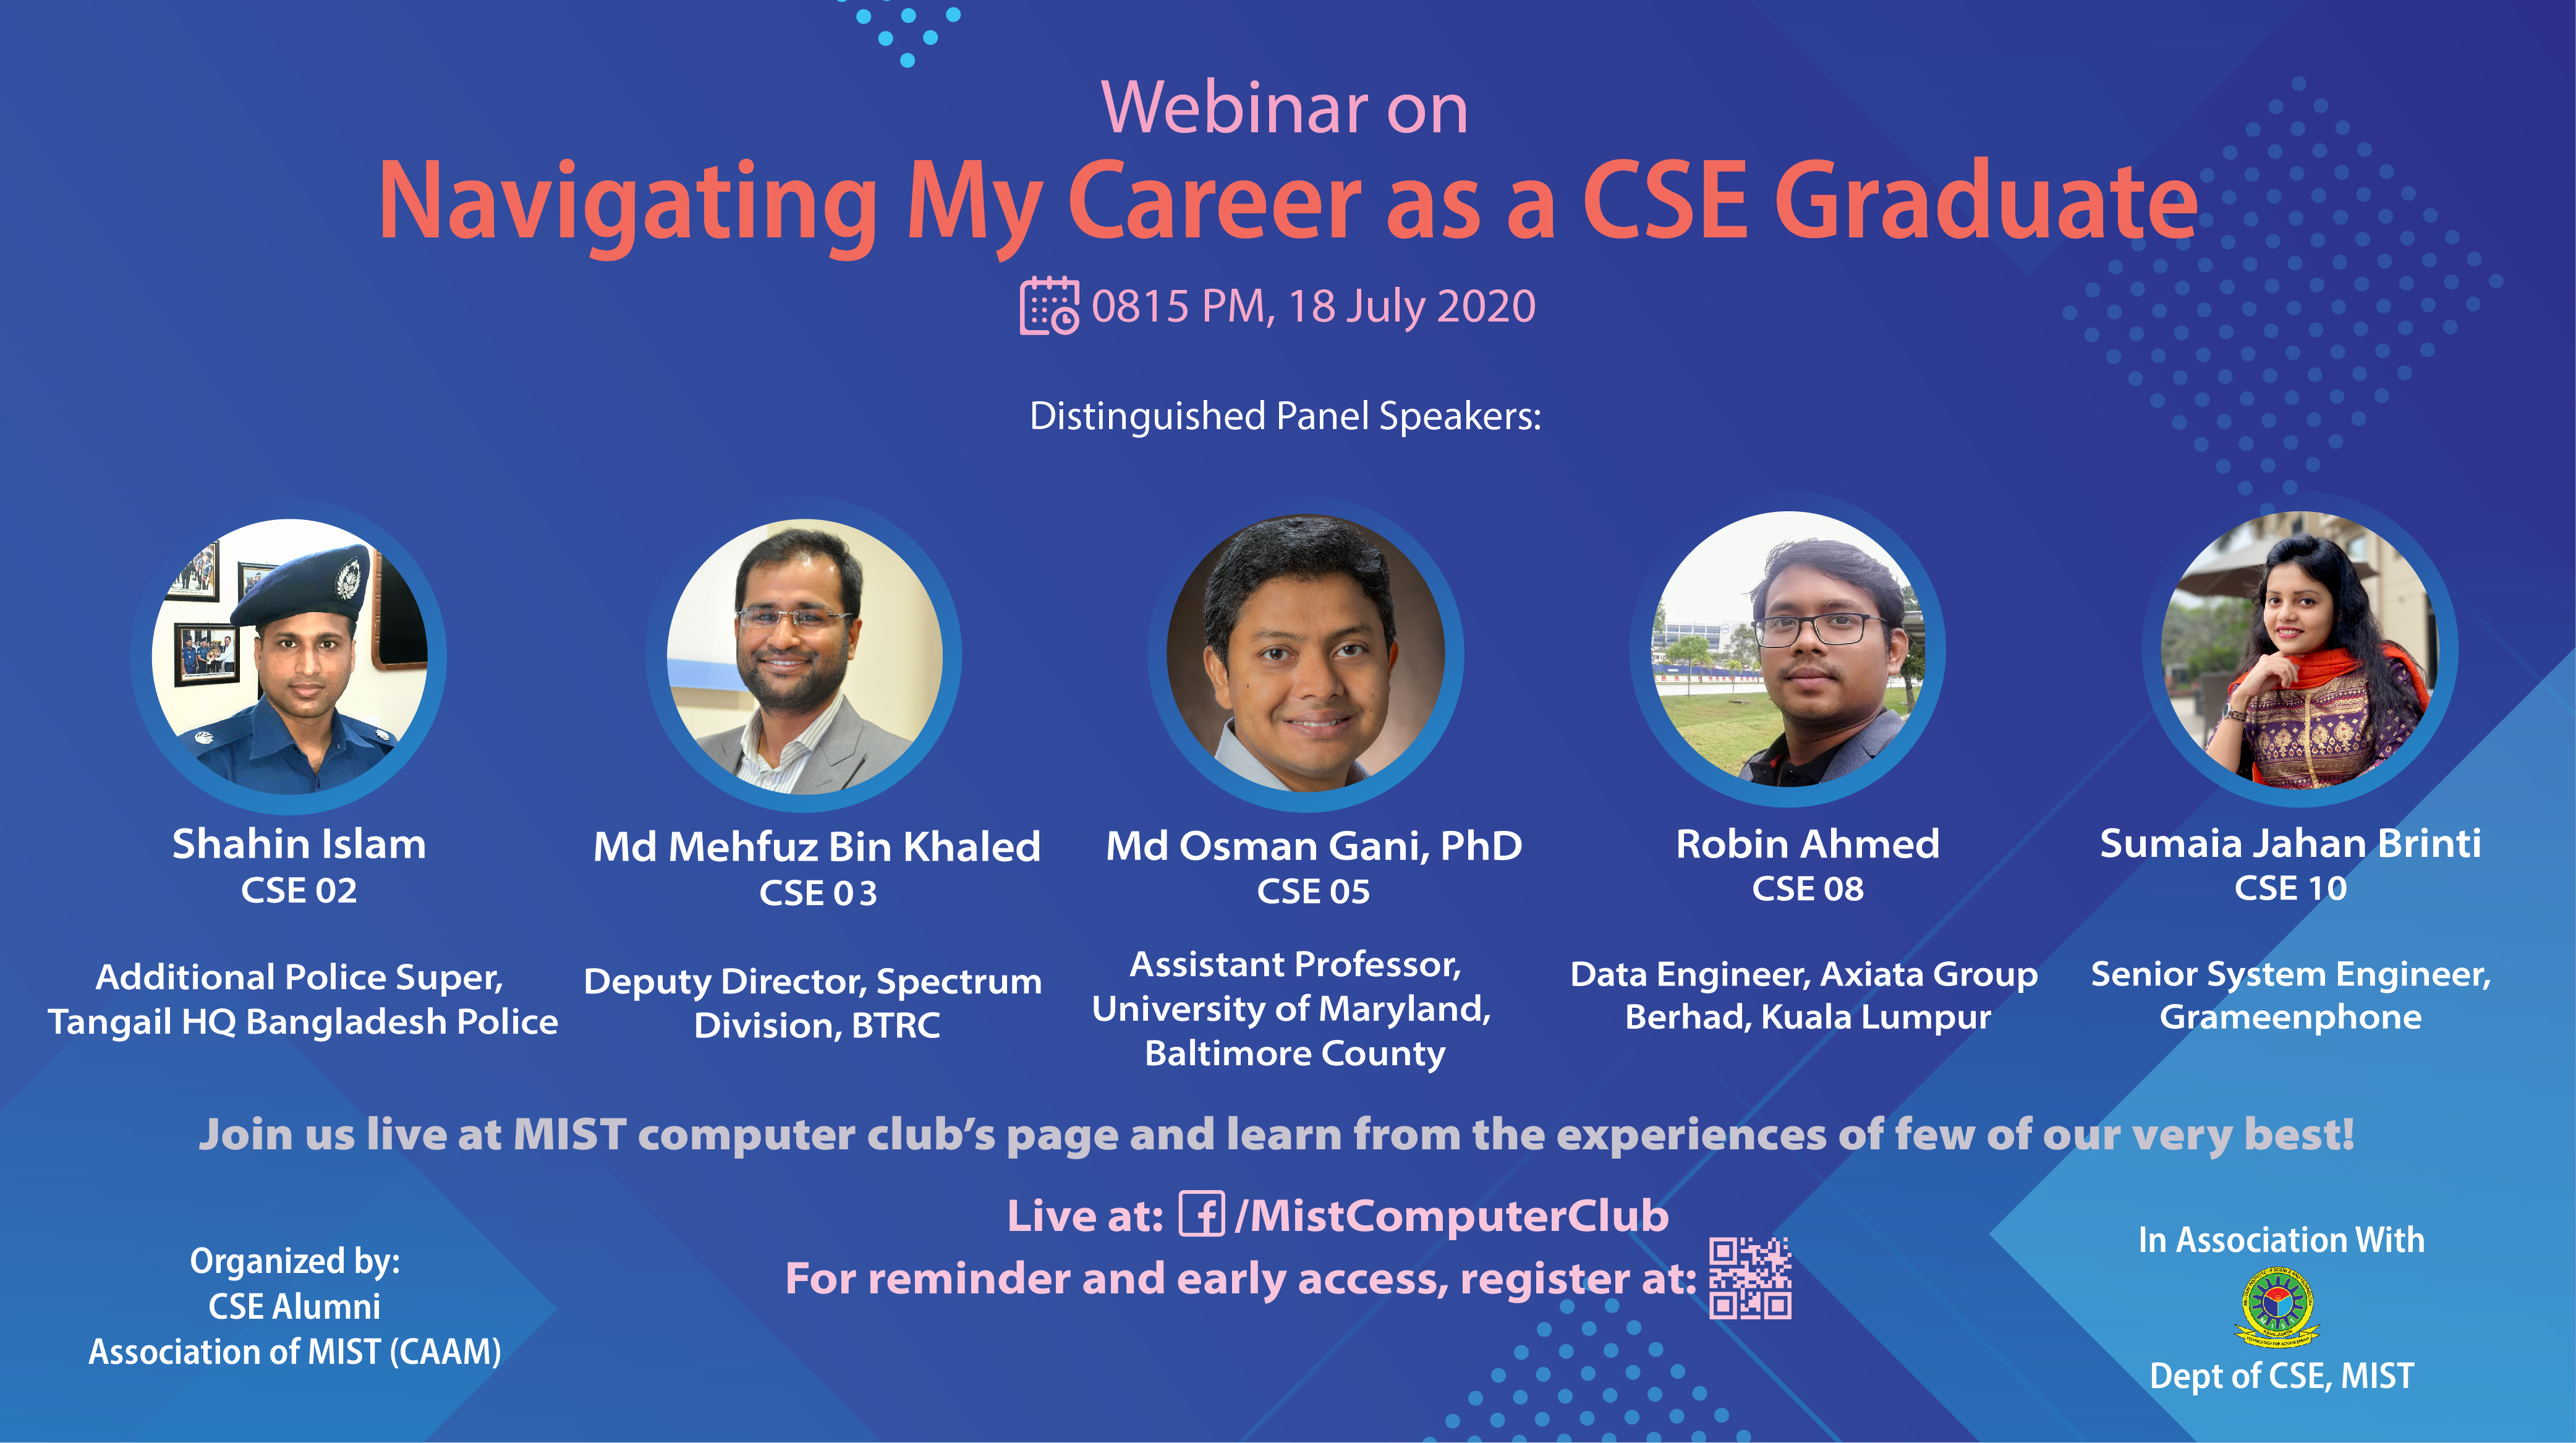 Webinar on "Navigating My Career as a CSE Graduate" arranged by CSE Alumni Association of MIST